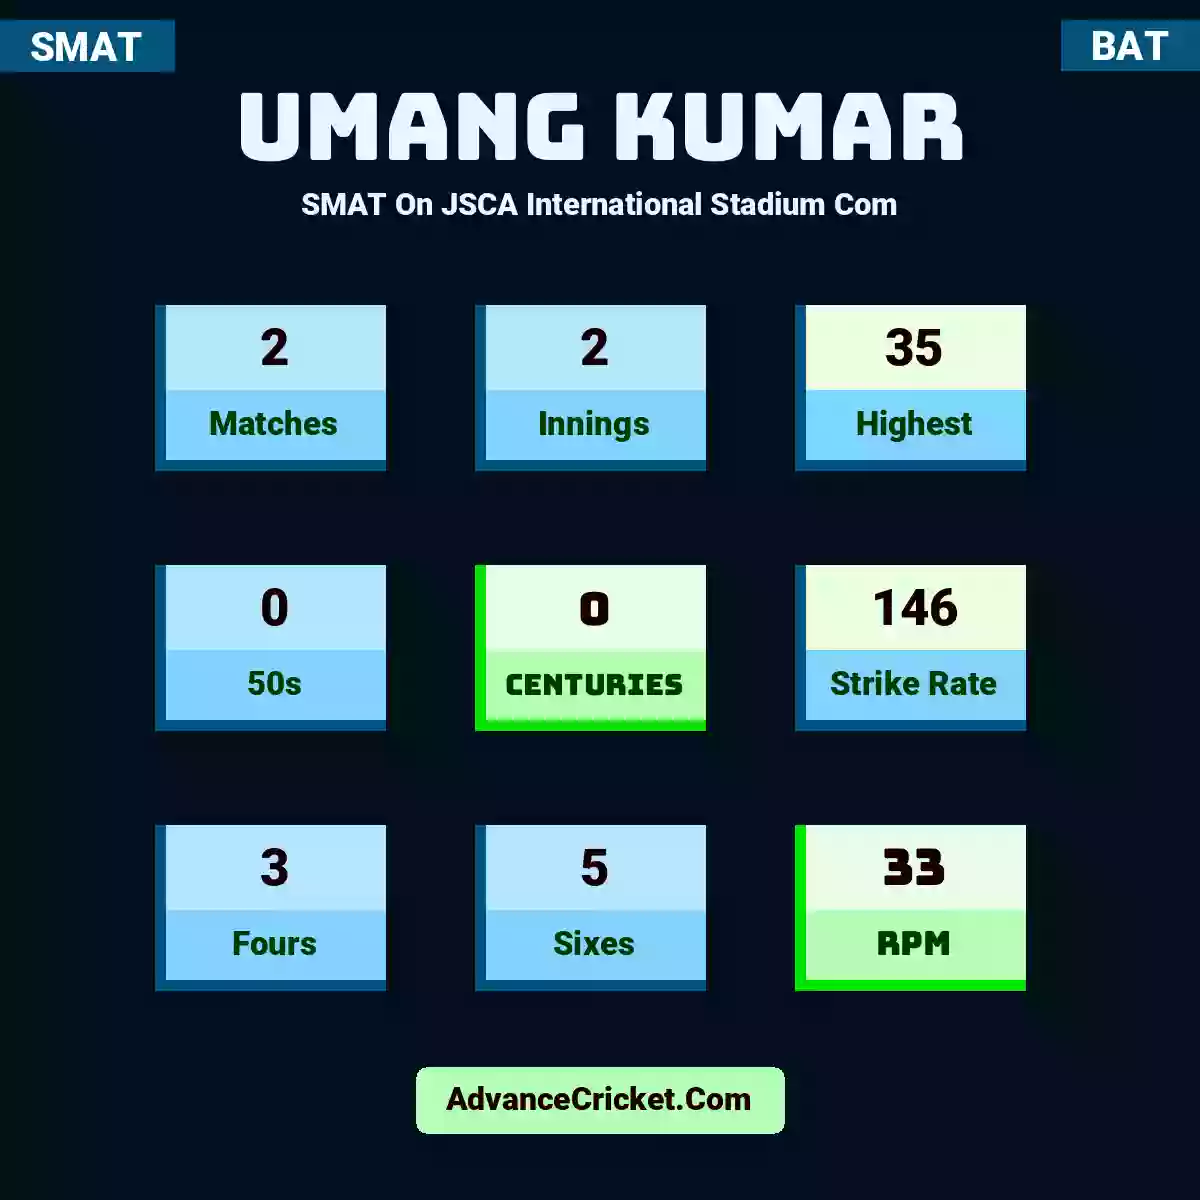 Umang Kumar SMAT  On JSCA International Stadium Com, Umang Kumar played 2 matches, scored 35 runs as highest, 0 half-centuries, and 0 centuries, with a strike rate of 146. U.Kumar hit 3 fours and 5 sixes, with an RPM of 33.